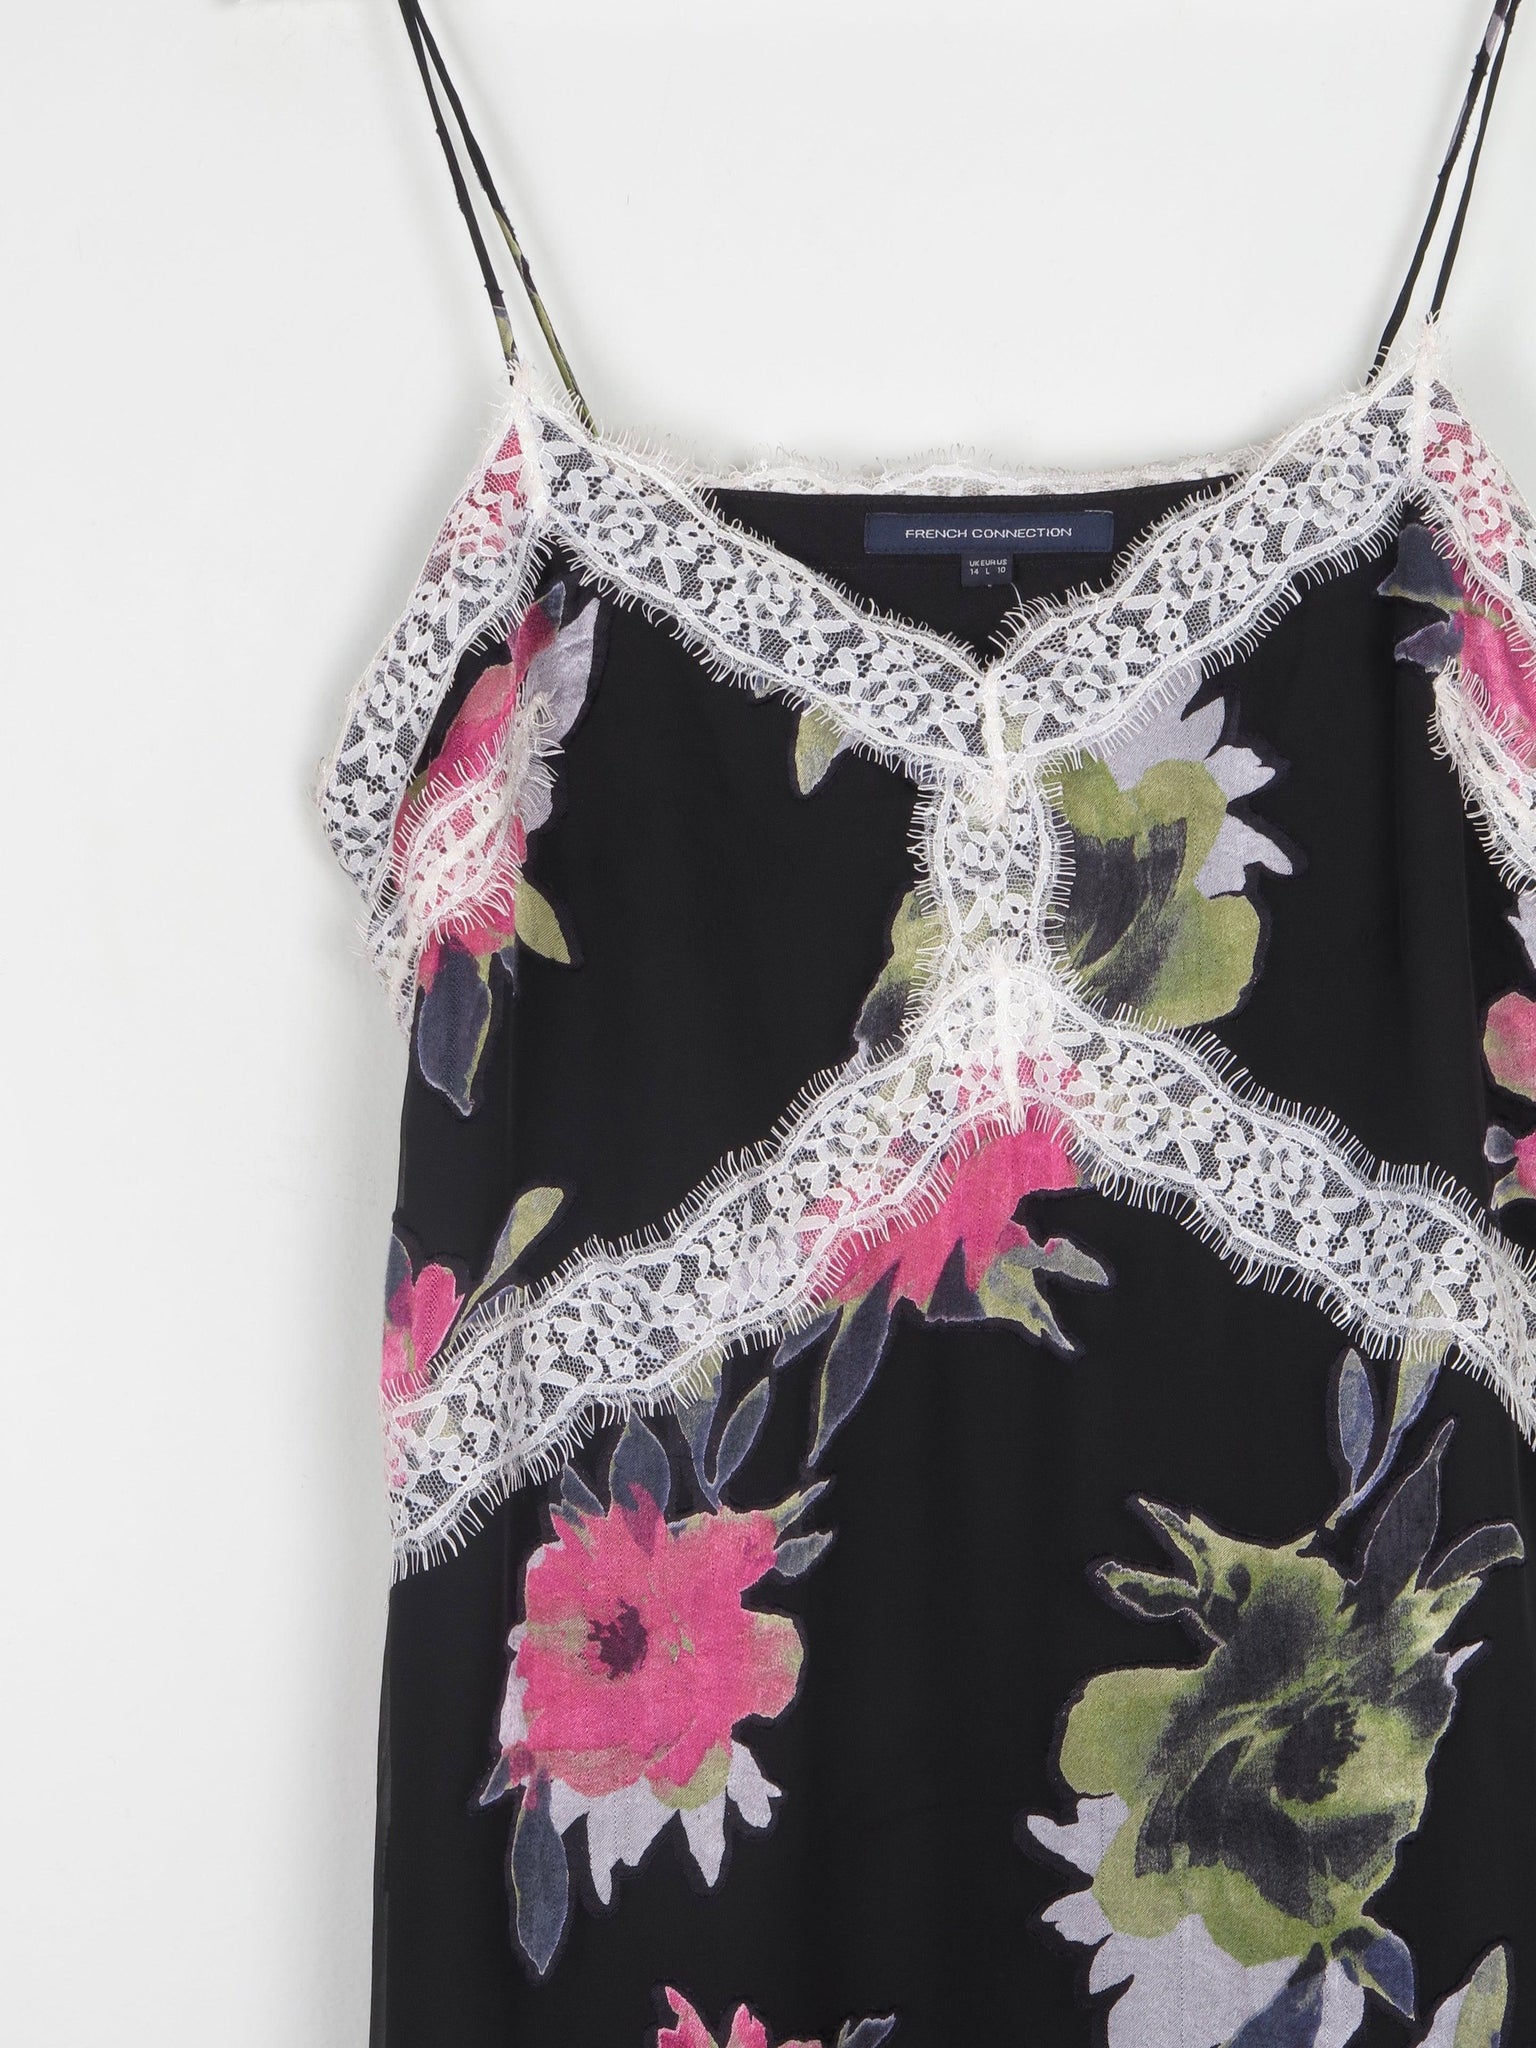 Vintage French Connection Devore Floral Camisole Dress 14 - The Harlequin